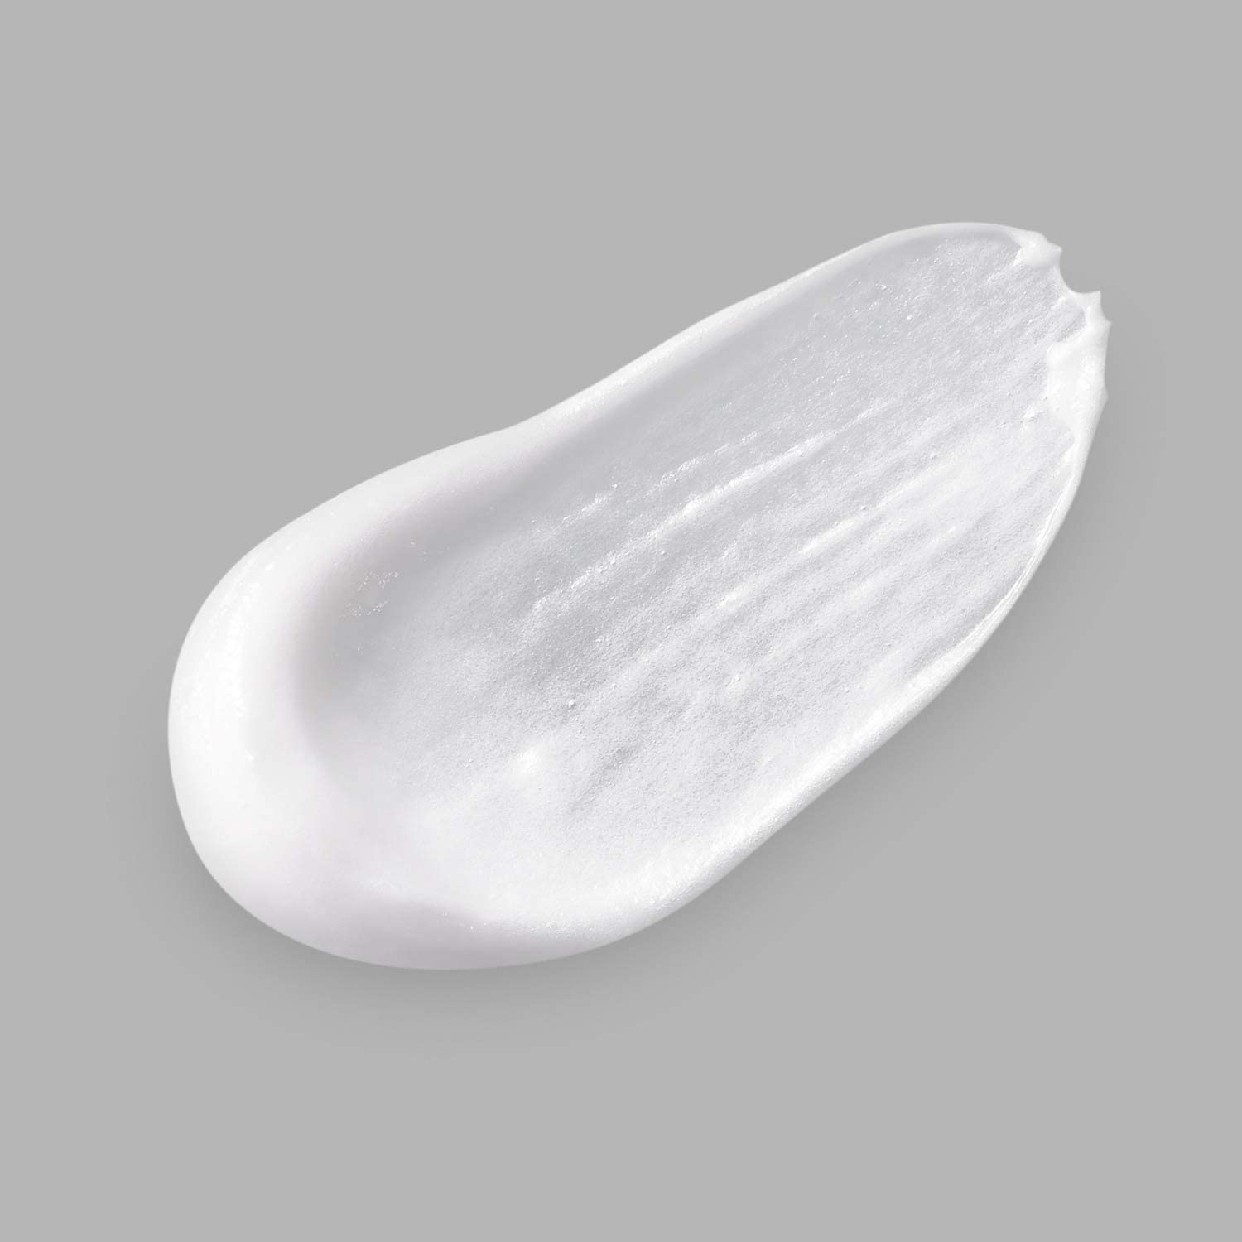 ROSETTE(ロゼット) セラミド濃密泡洗顔料の商品画像4 